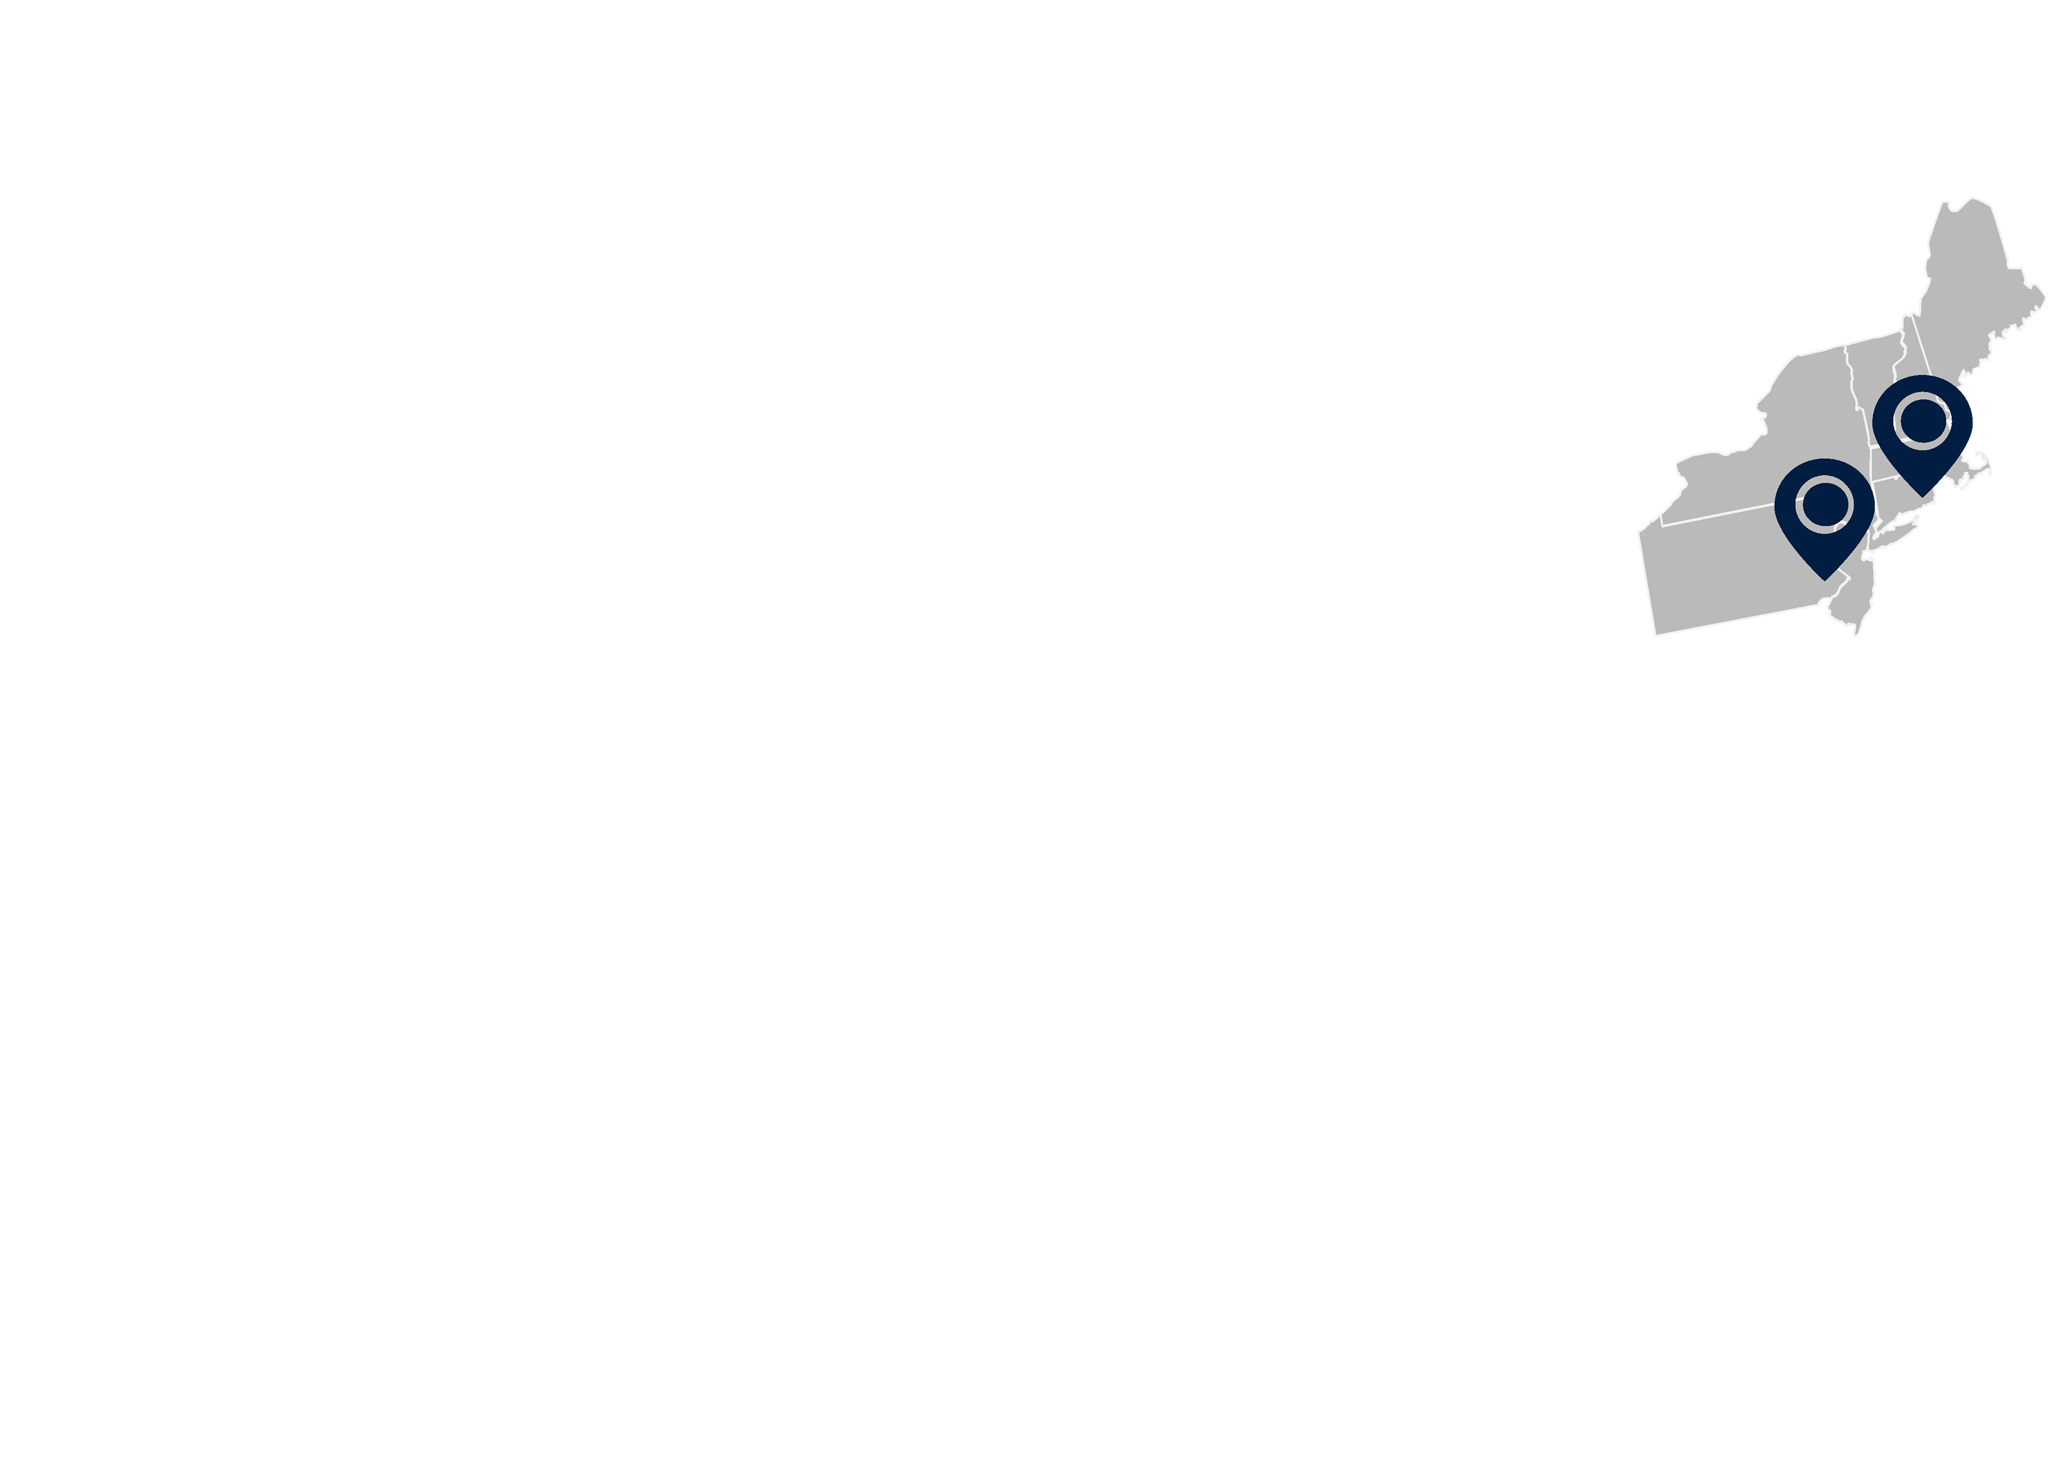 Northeast map image